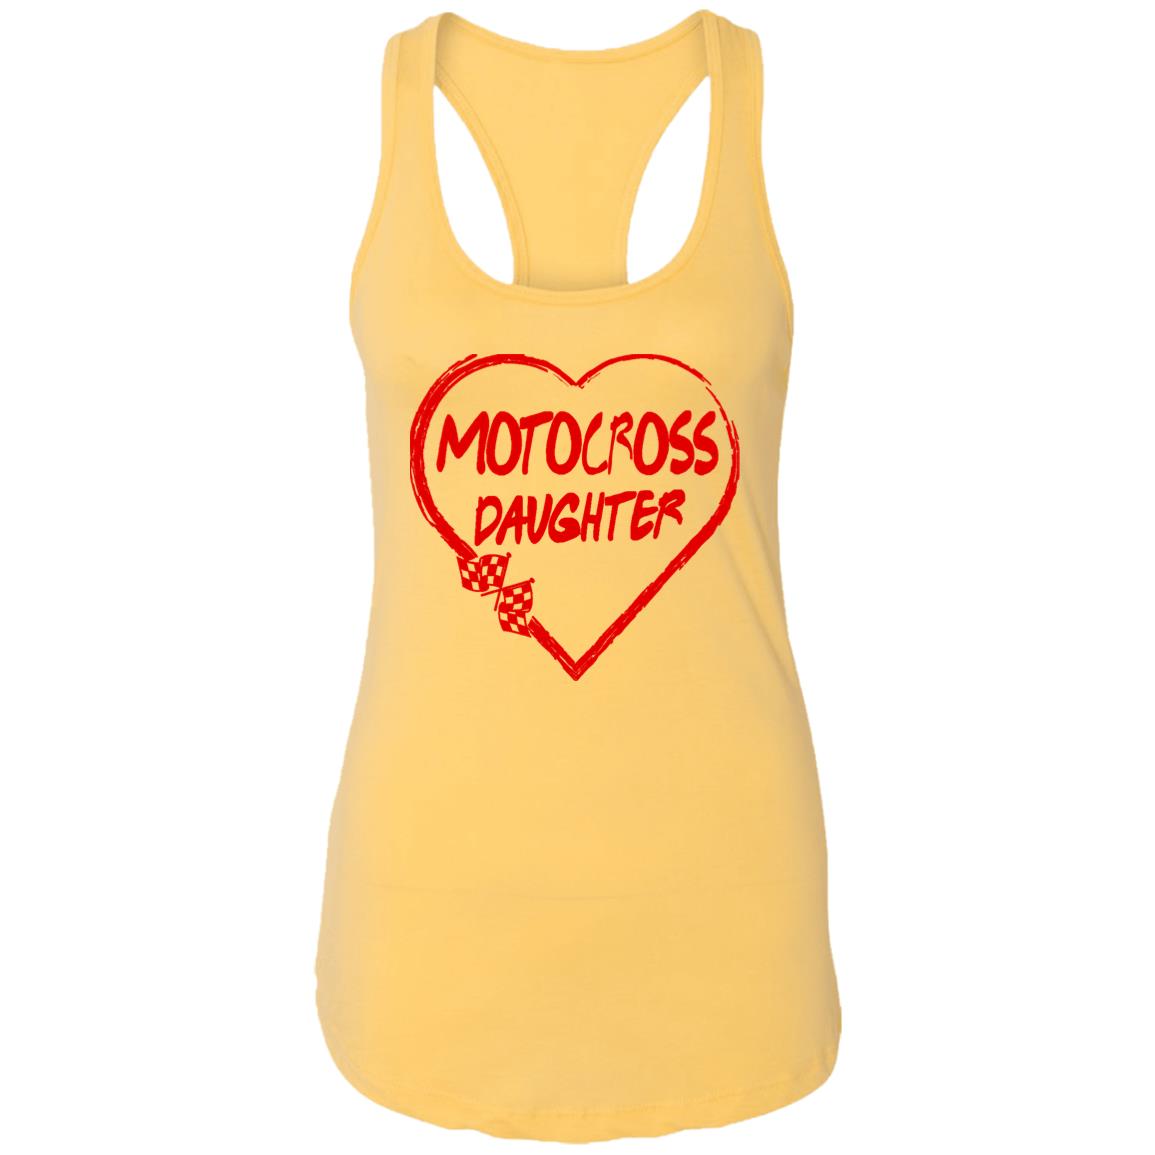 Motocross Daughter Heart Ladies Ideal Racerback Tank